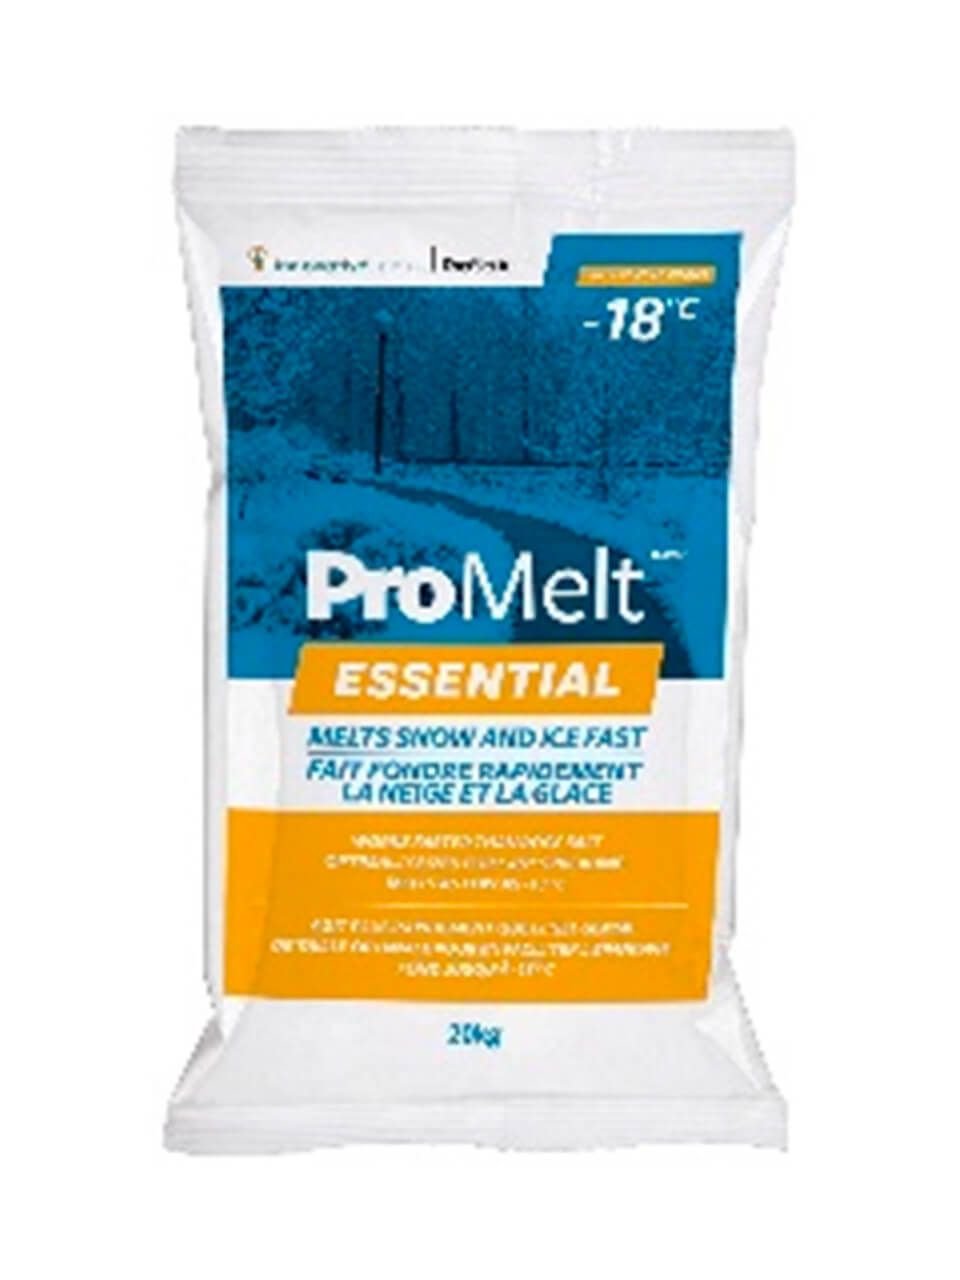 Promelt essential bag